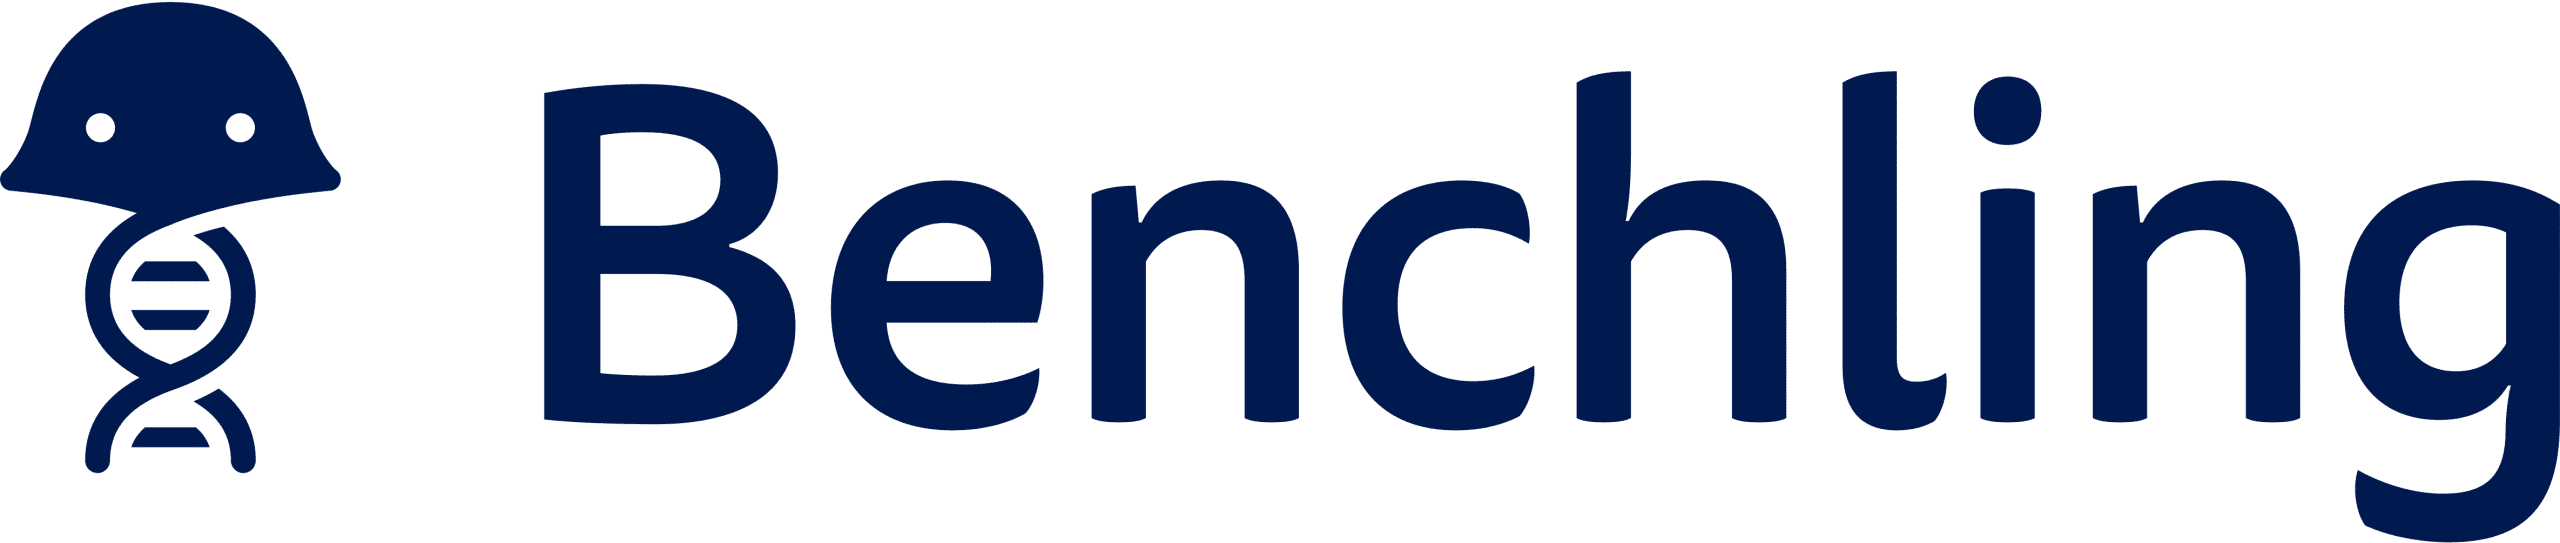 Benchling Logo